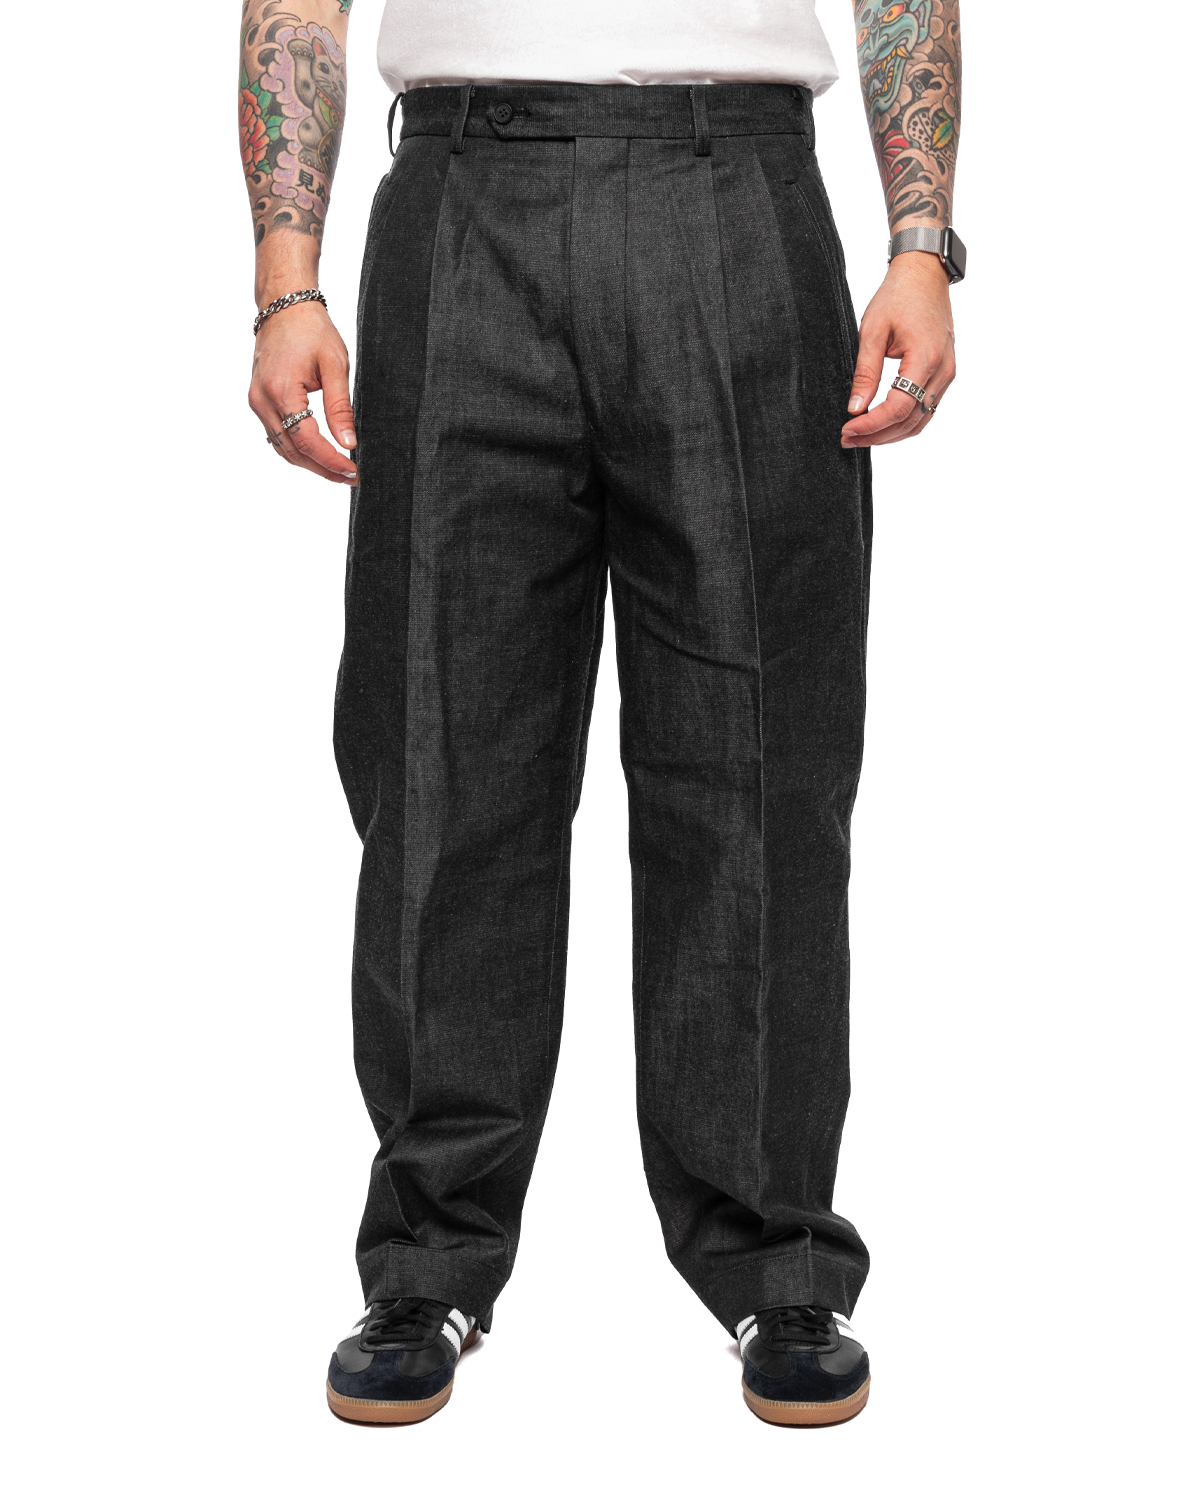 Men's Pants Black/White HL-P006-051